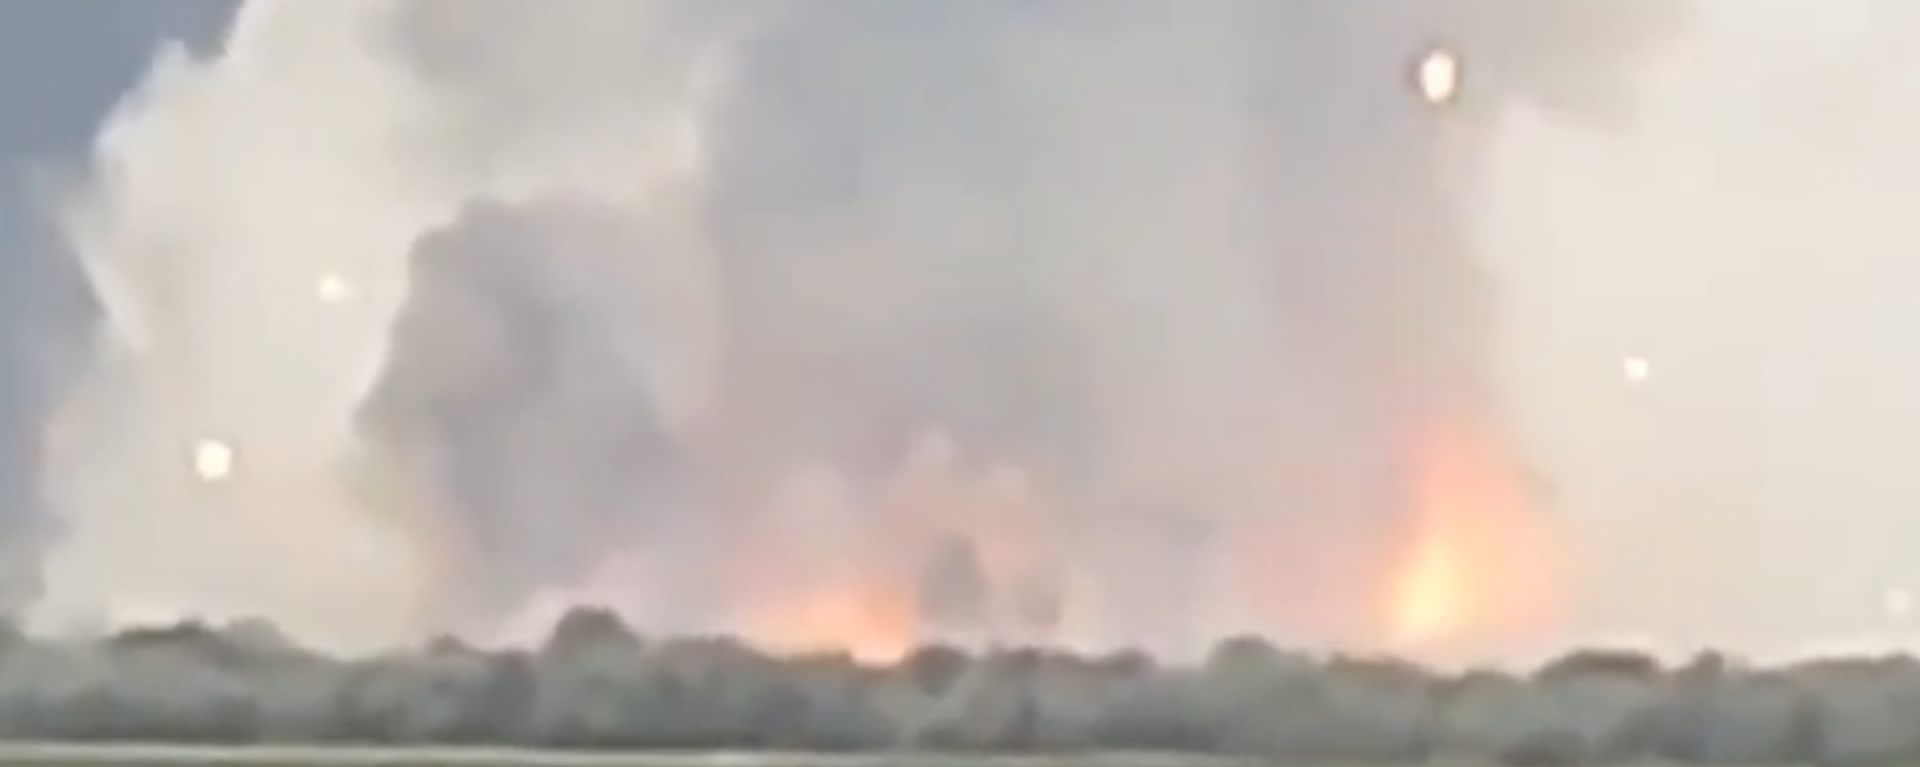 Explosion at ammunition depot in Dzhankoi area of northern Crimea. Screengrab from footage captured by eyewitness. - Sputnik International, 1920, 16.08.2022